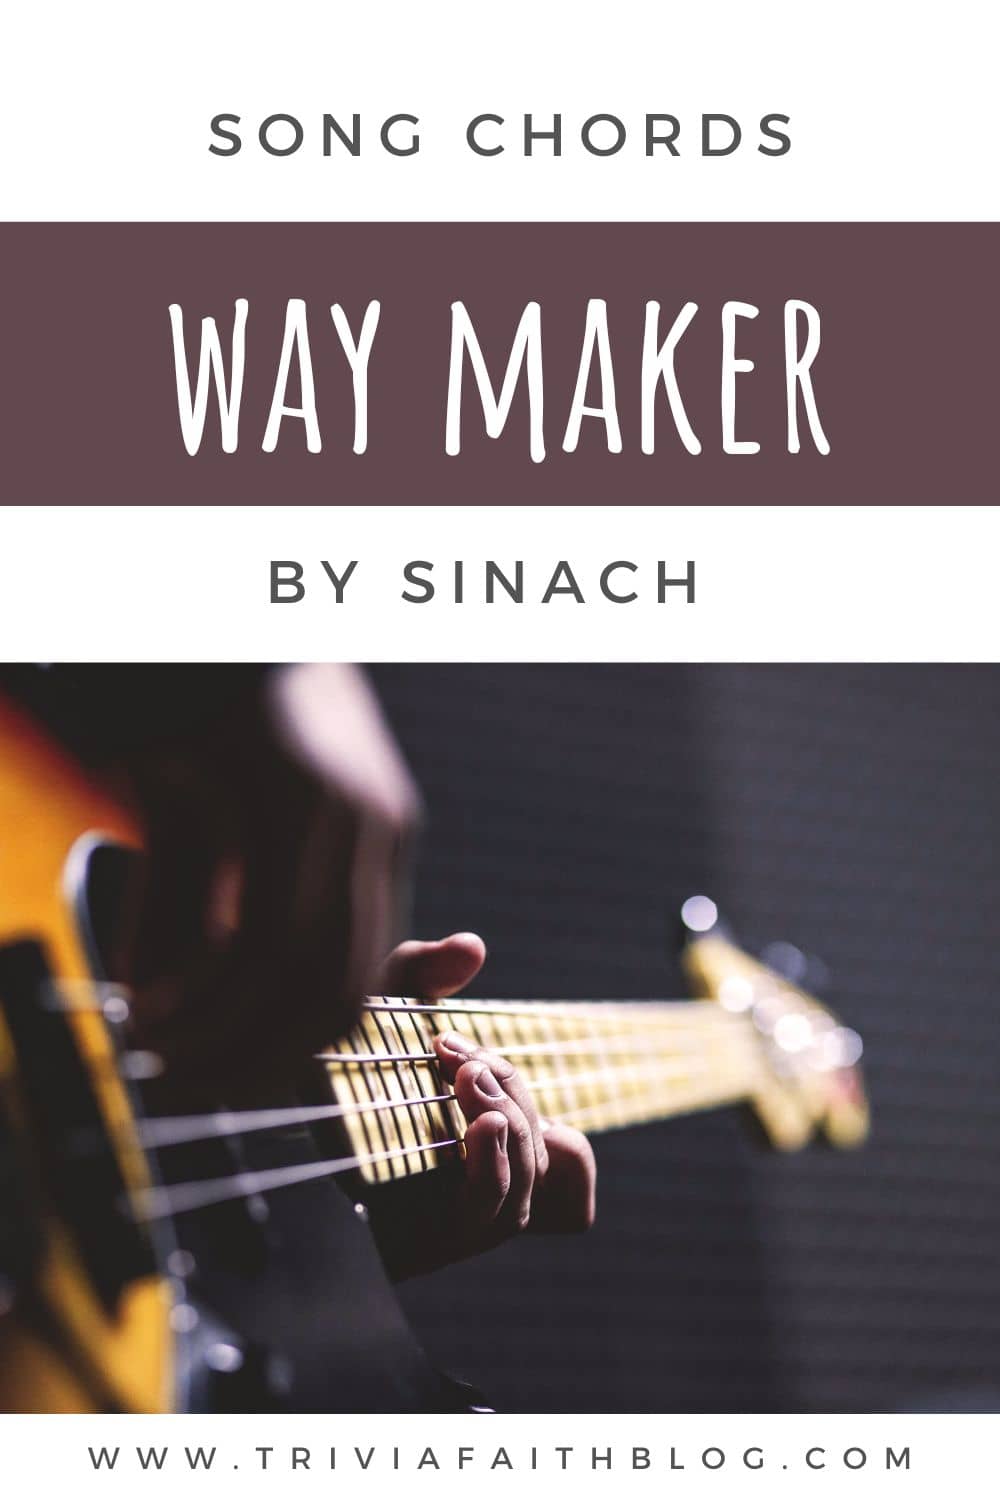 Way maker chords Sinach